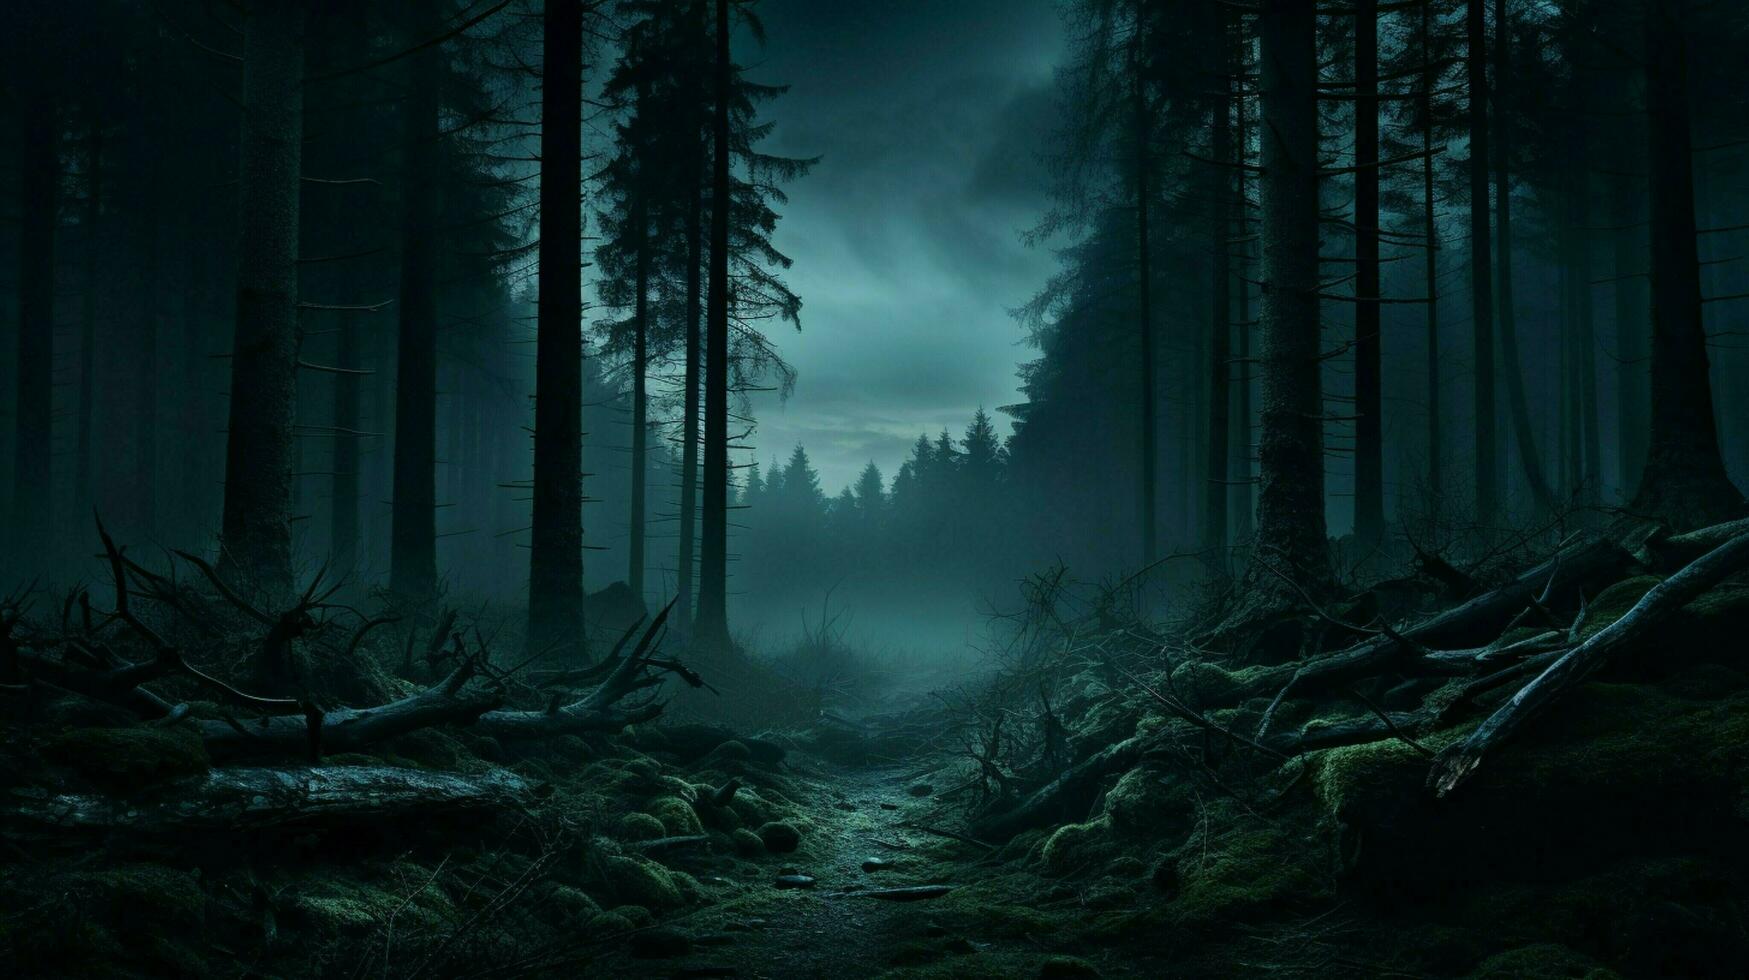 nebuloso floresta panorama Sombrio silhueta misterioso atmosfera foto